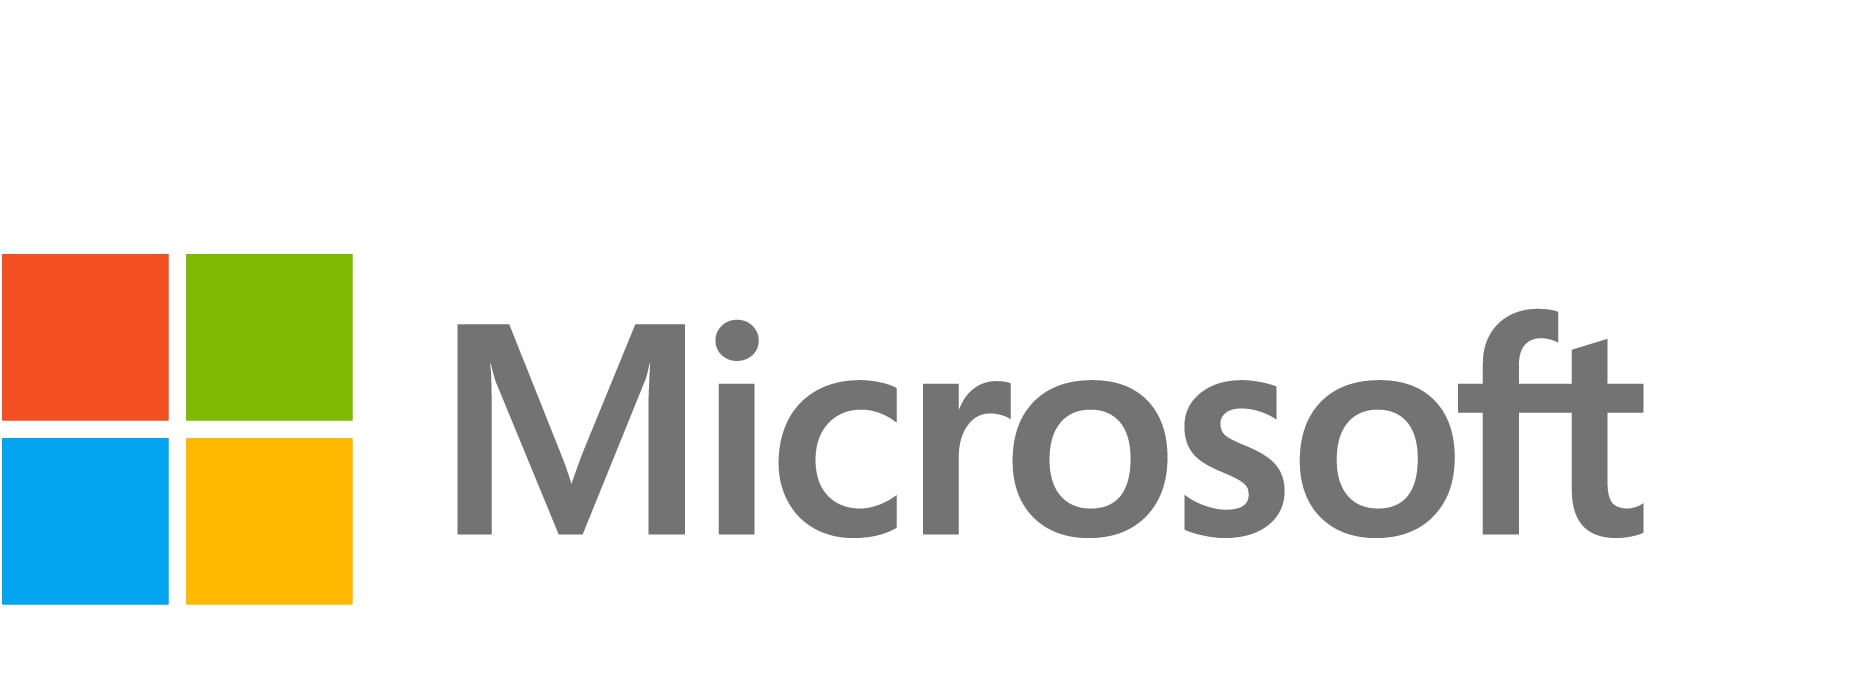 Microsoft Dynamics 365 for Operations, Enterprise edition - Sandbox Tier 4: